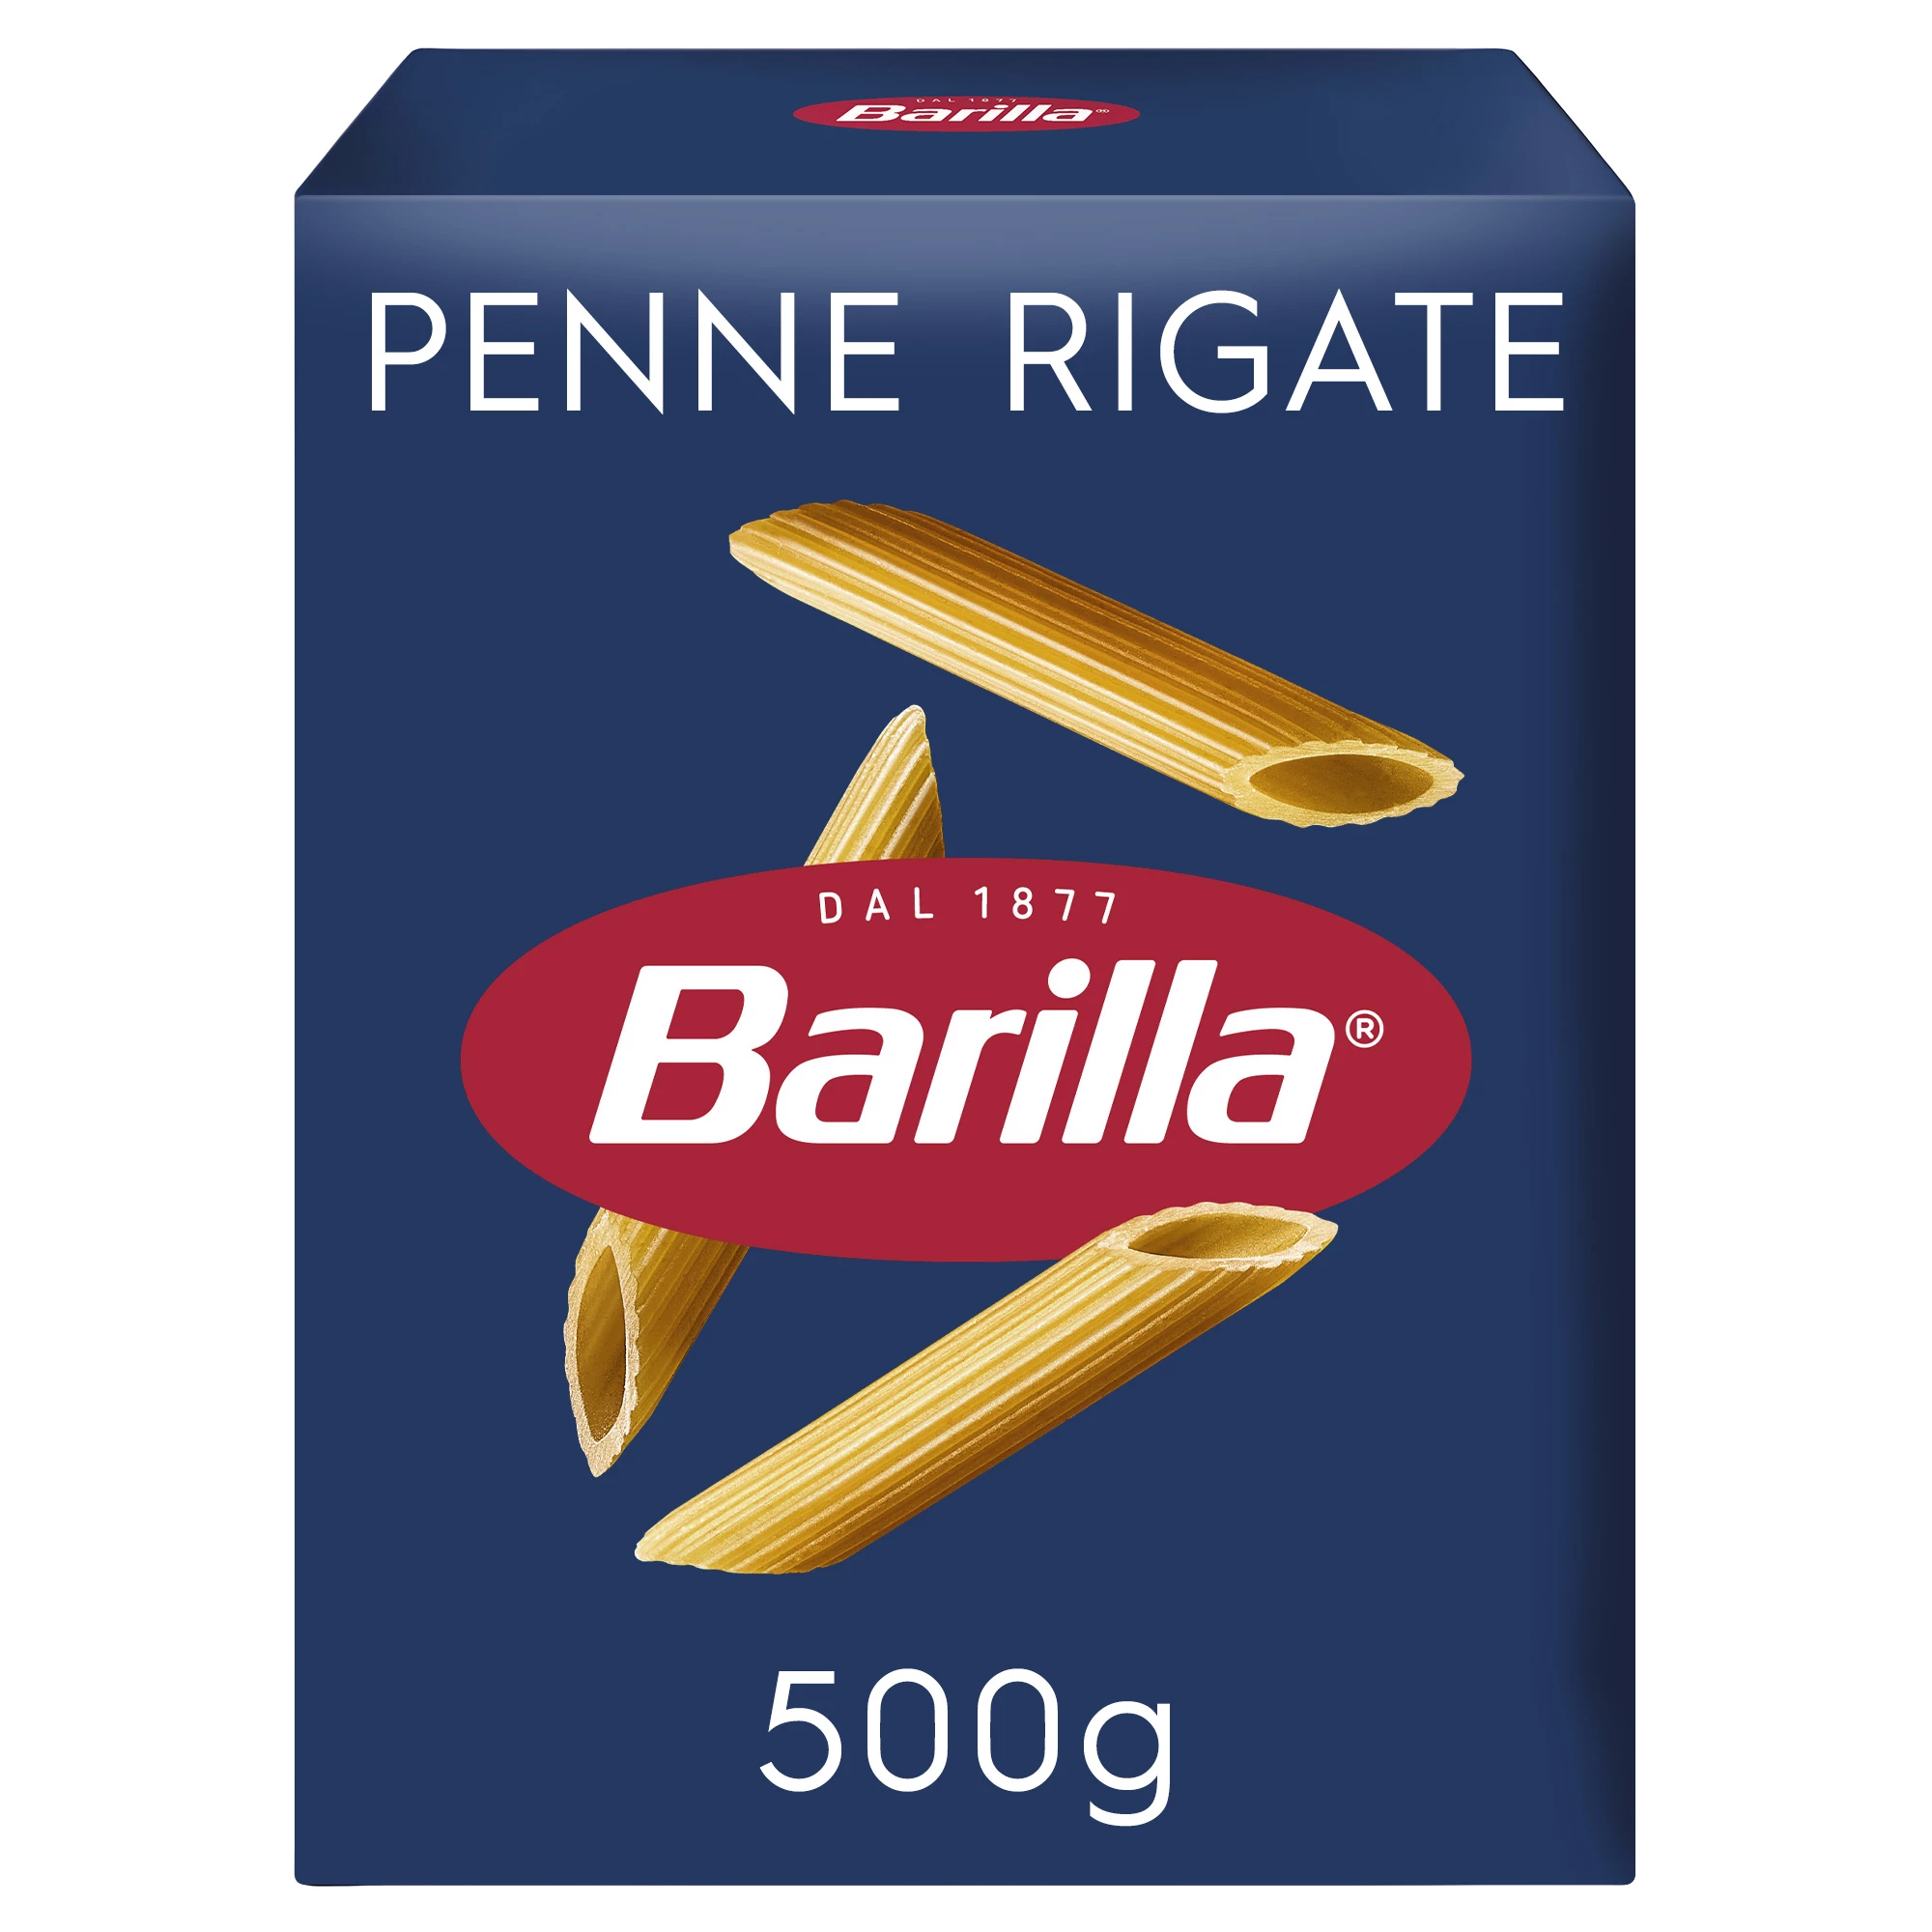 Mì Ý Penne Rigate 500g - BARILLA